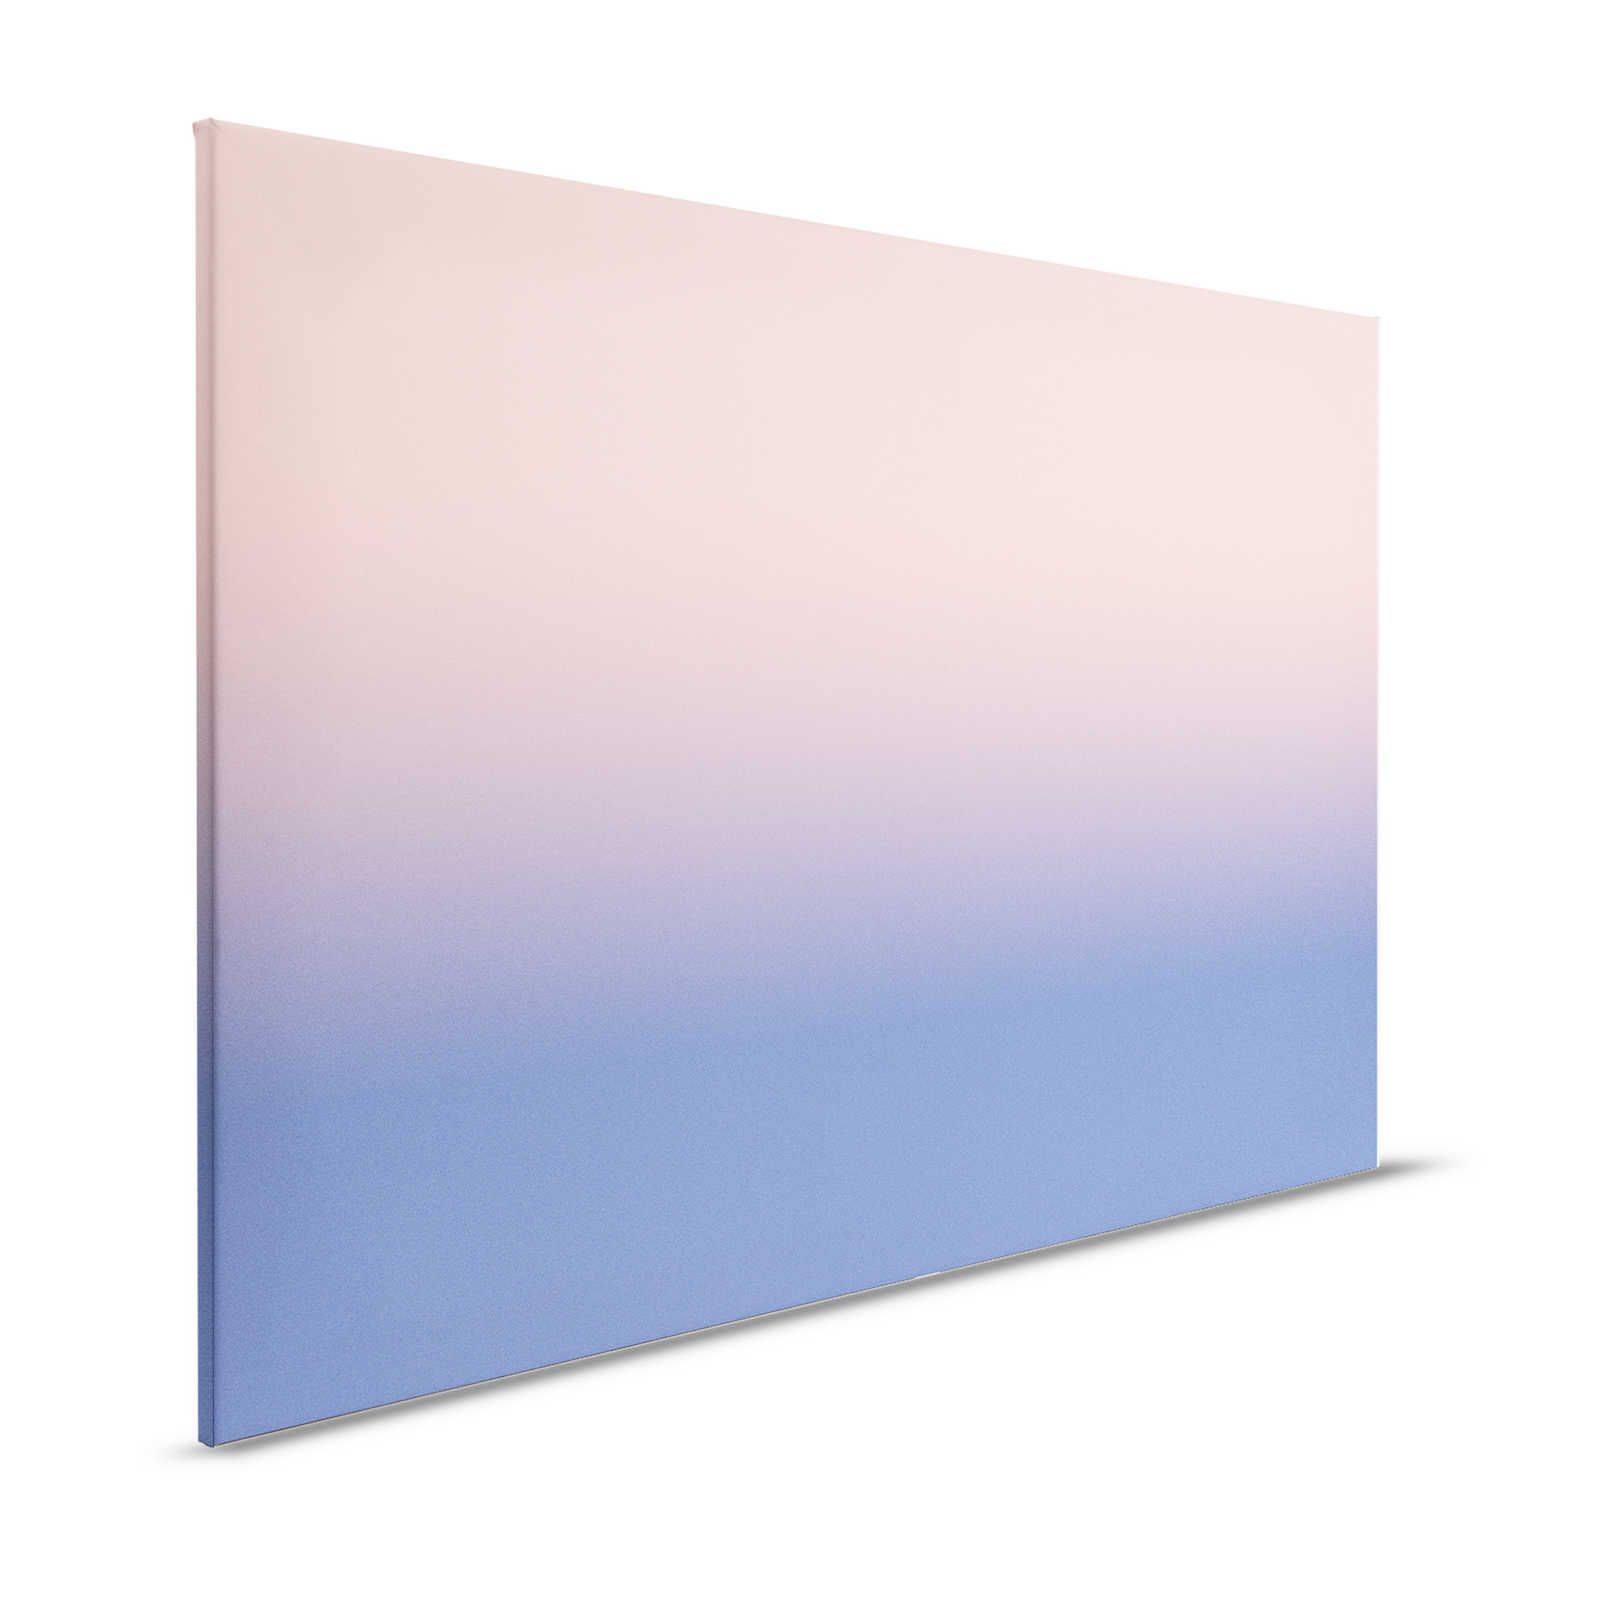 Colour Studio 2 - Ombre Canvas Print Pink & Purple for Girls' Room - 1.20 m x 0.80 m
